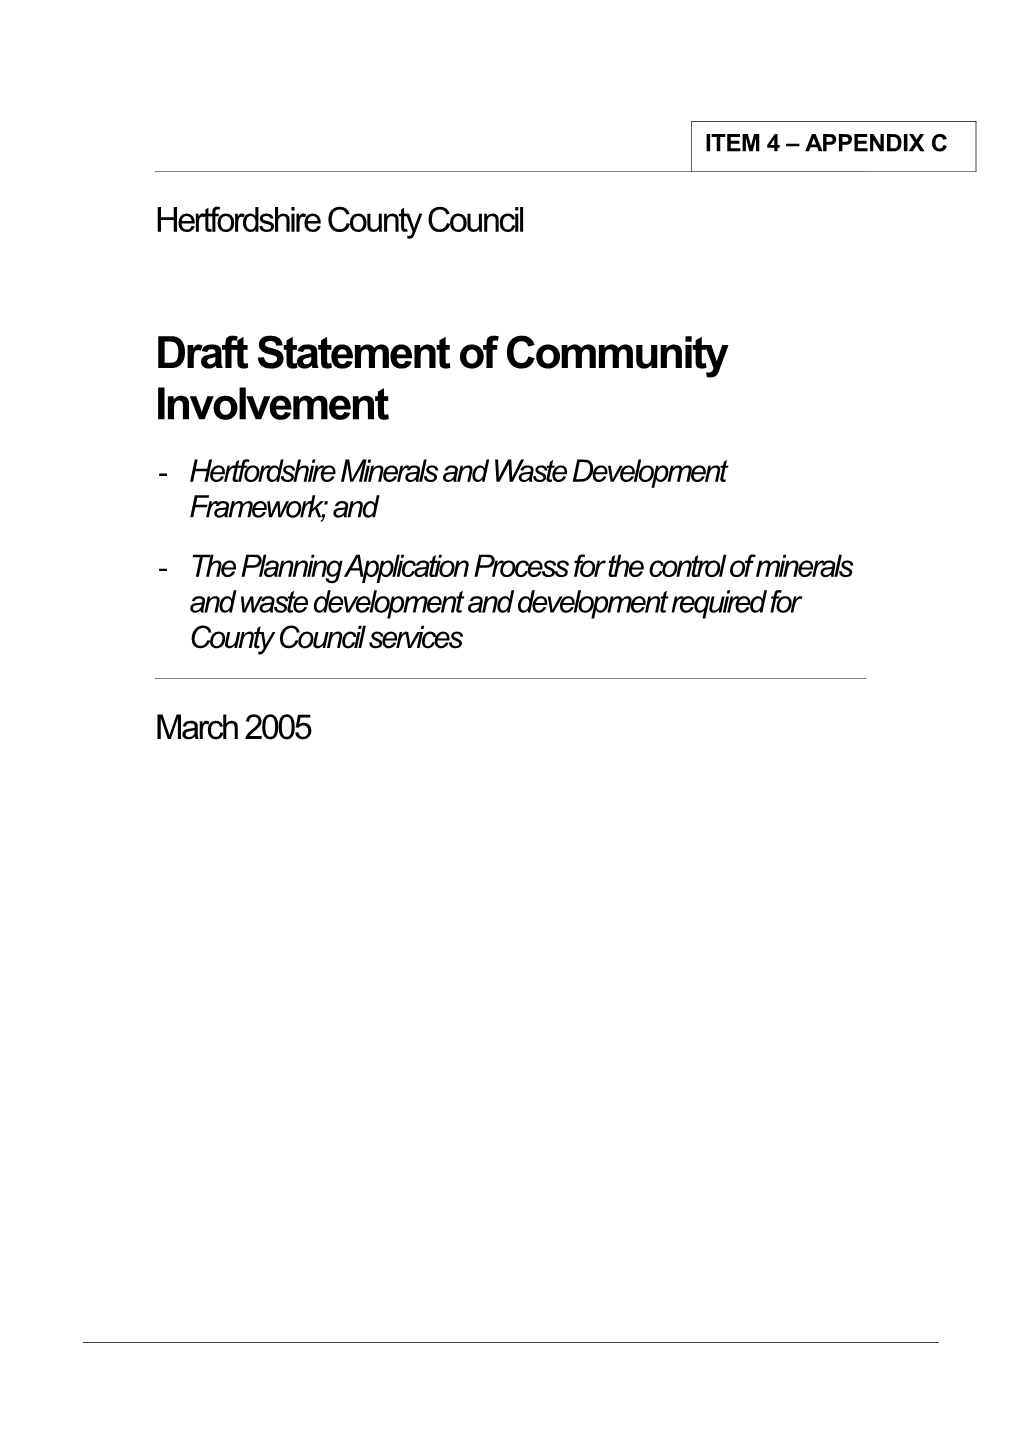 Draft Statement of Community Involvement